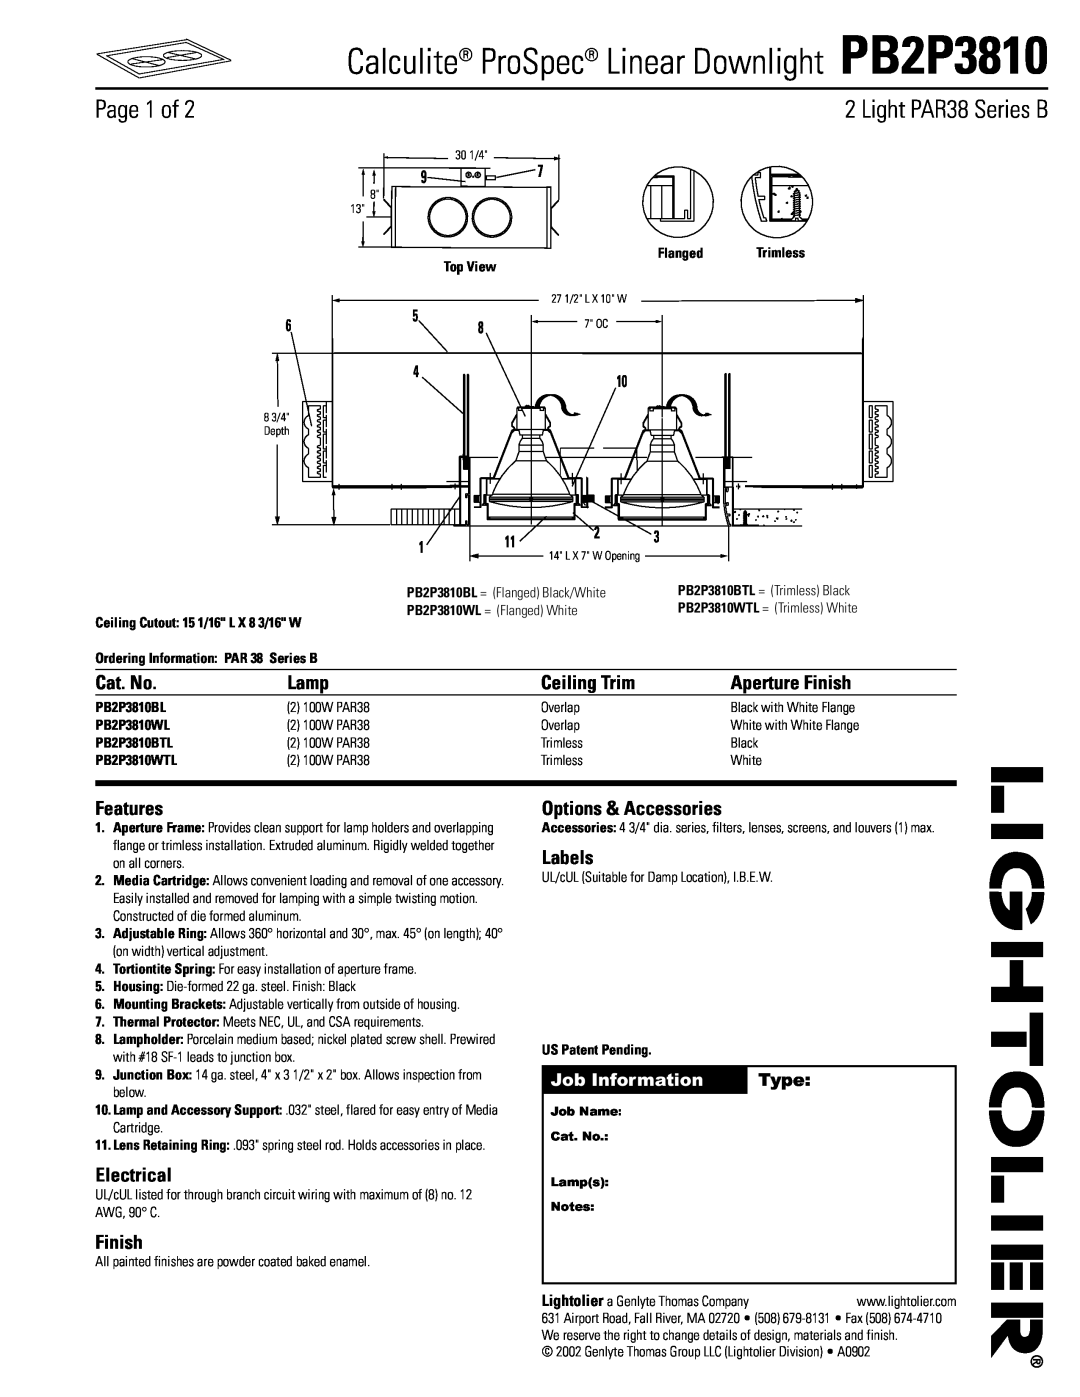 Lightolier manual Calculite ProSpec Linear Downlight PB2P3810, Page 1 of, Light PAR38 Series B, Cat. No, Lamp, Features 